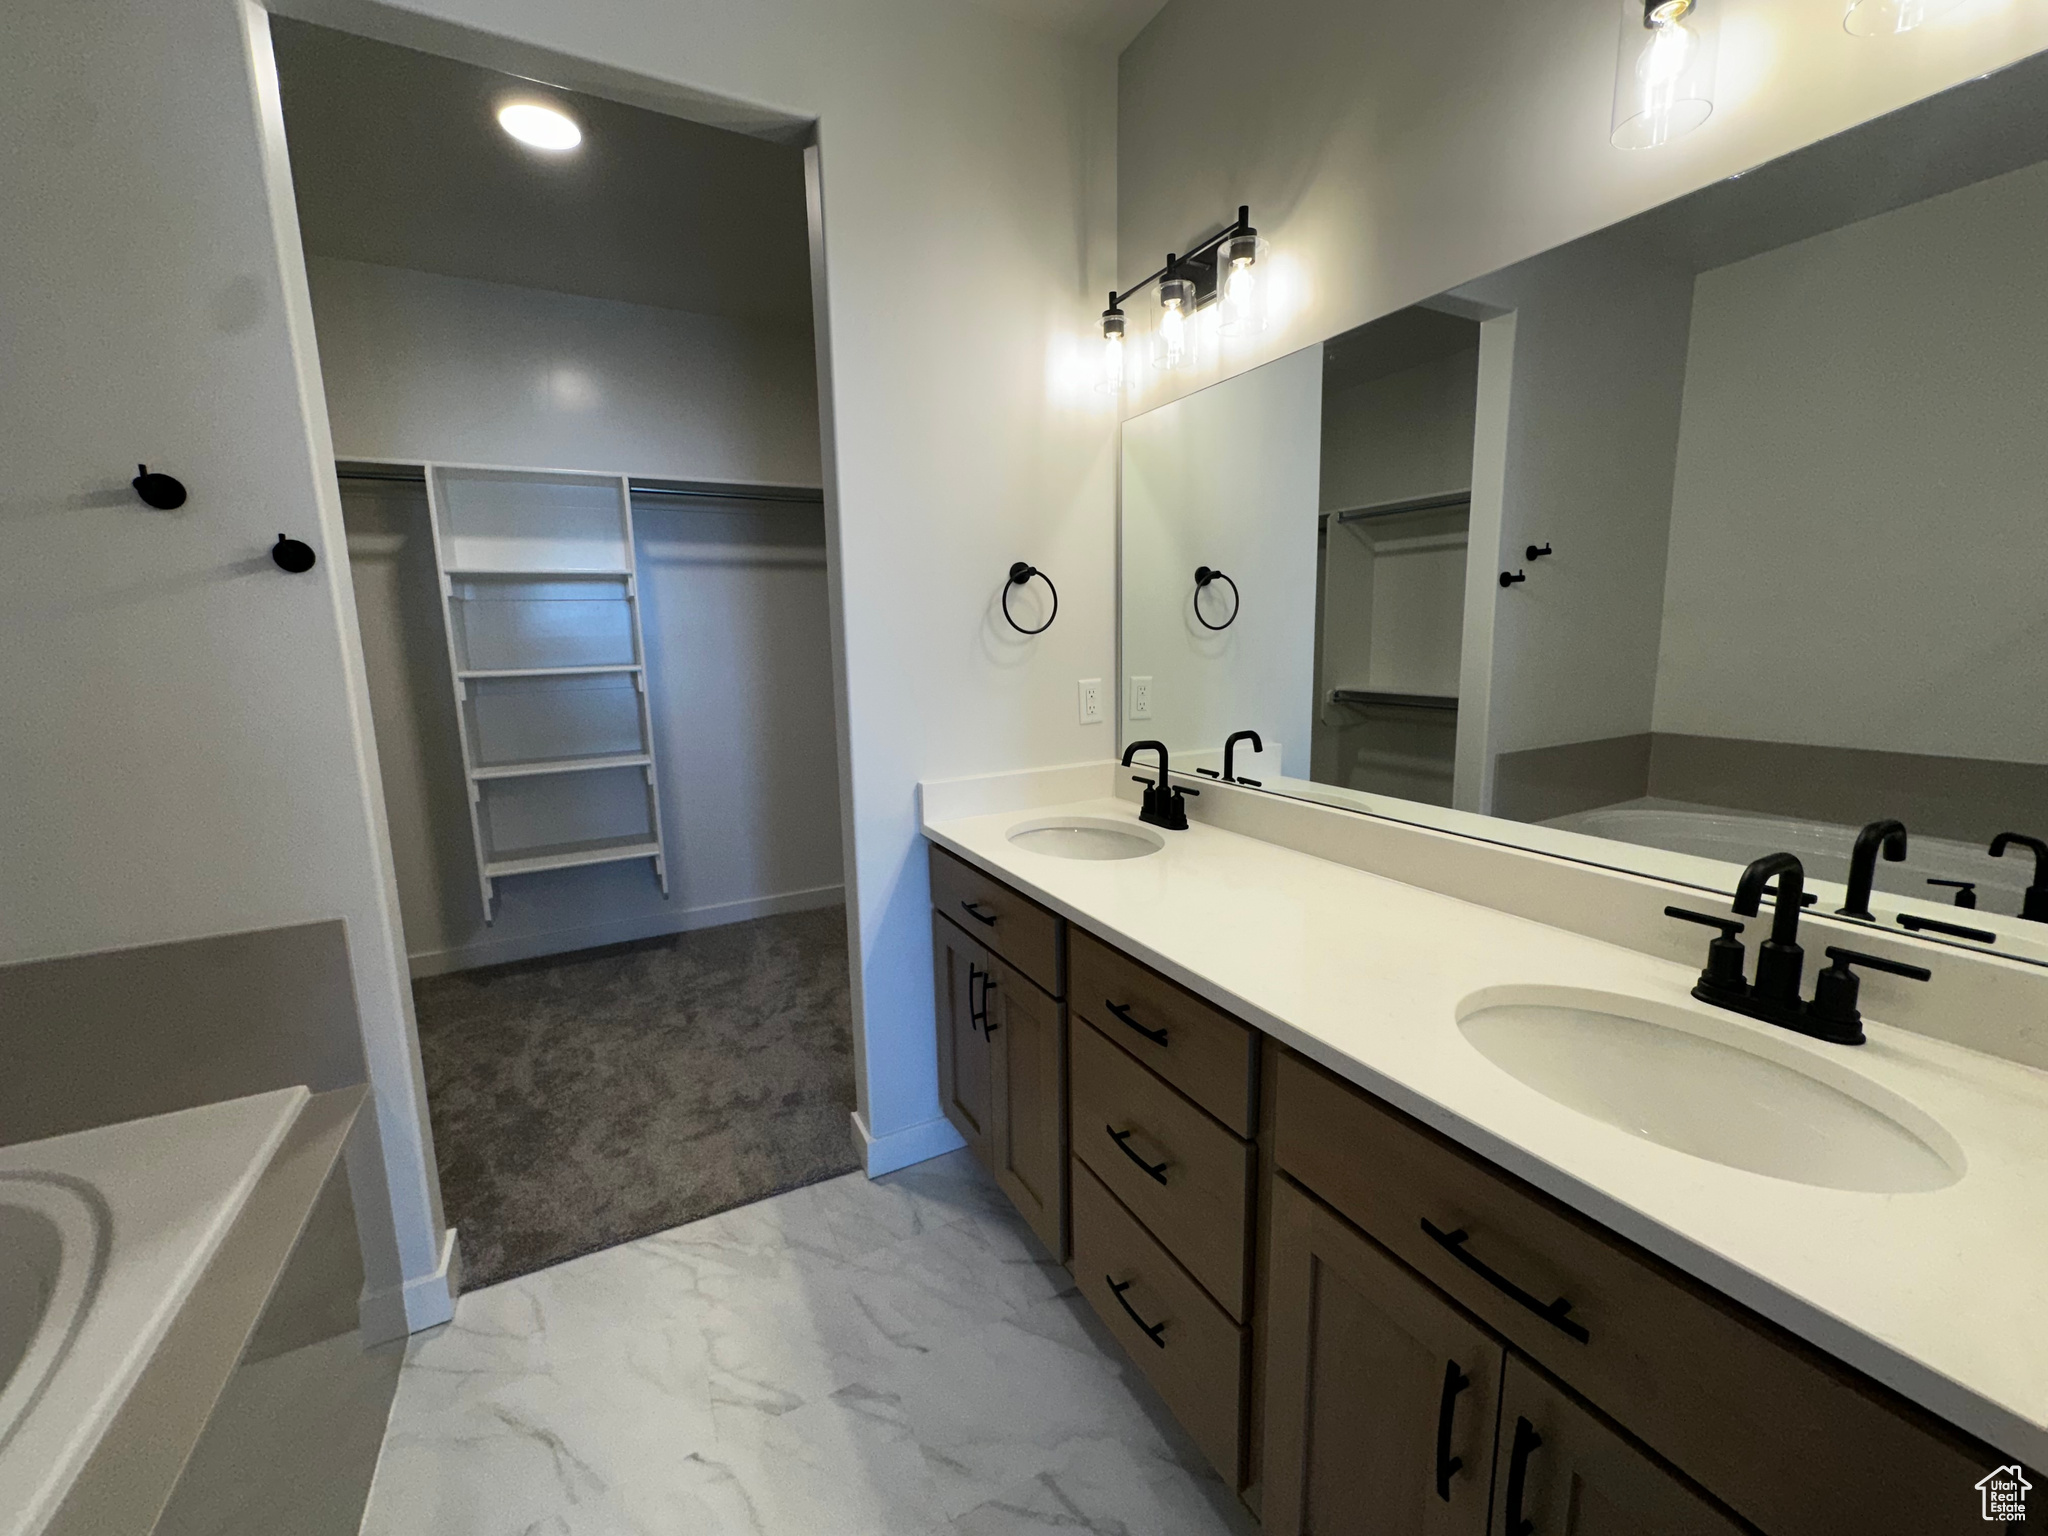 Bathroom with tile floors, dual vanity, and a washtub